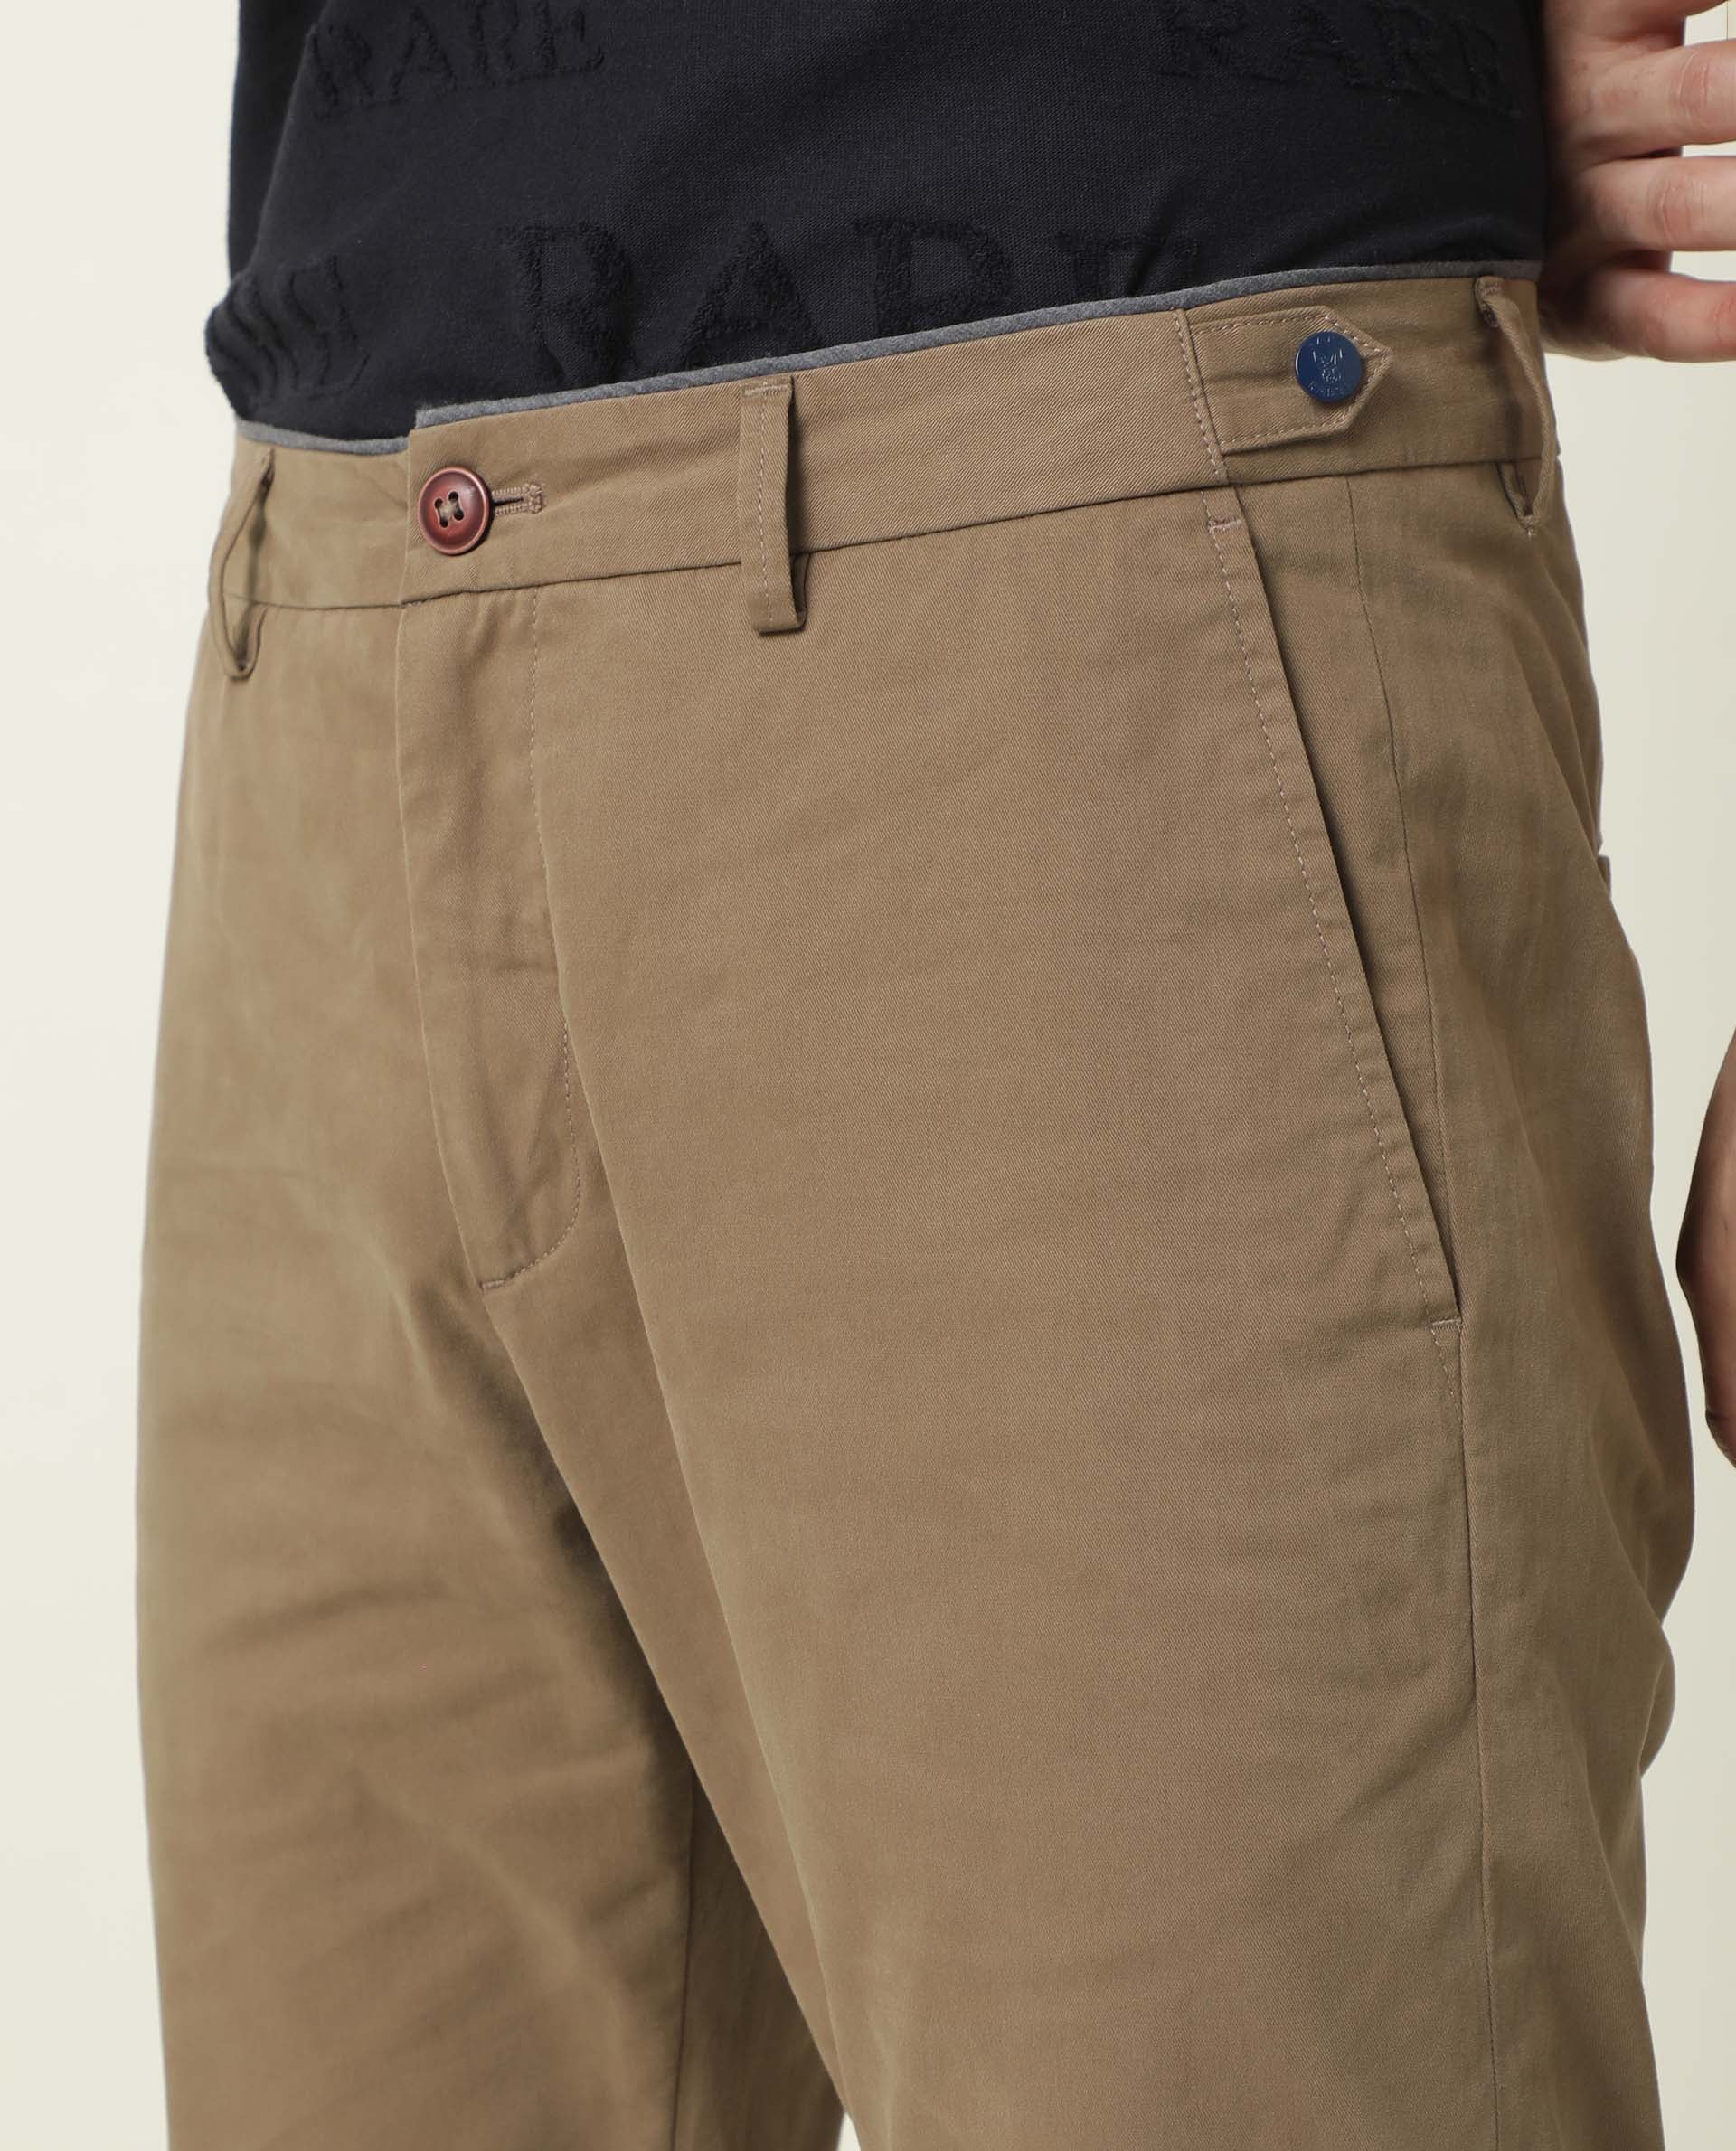 Buy Shotarr Slim Fit Beige Formal Pant for Men - Polyester Viscose Formal Trouser  for Gents - Office Formal Trouser for Men - Boys Work Utility Pants at  Amazon.in